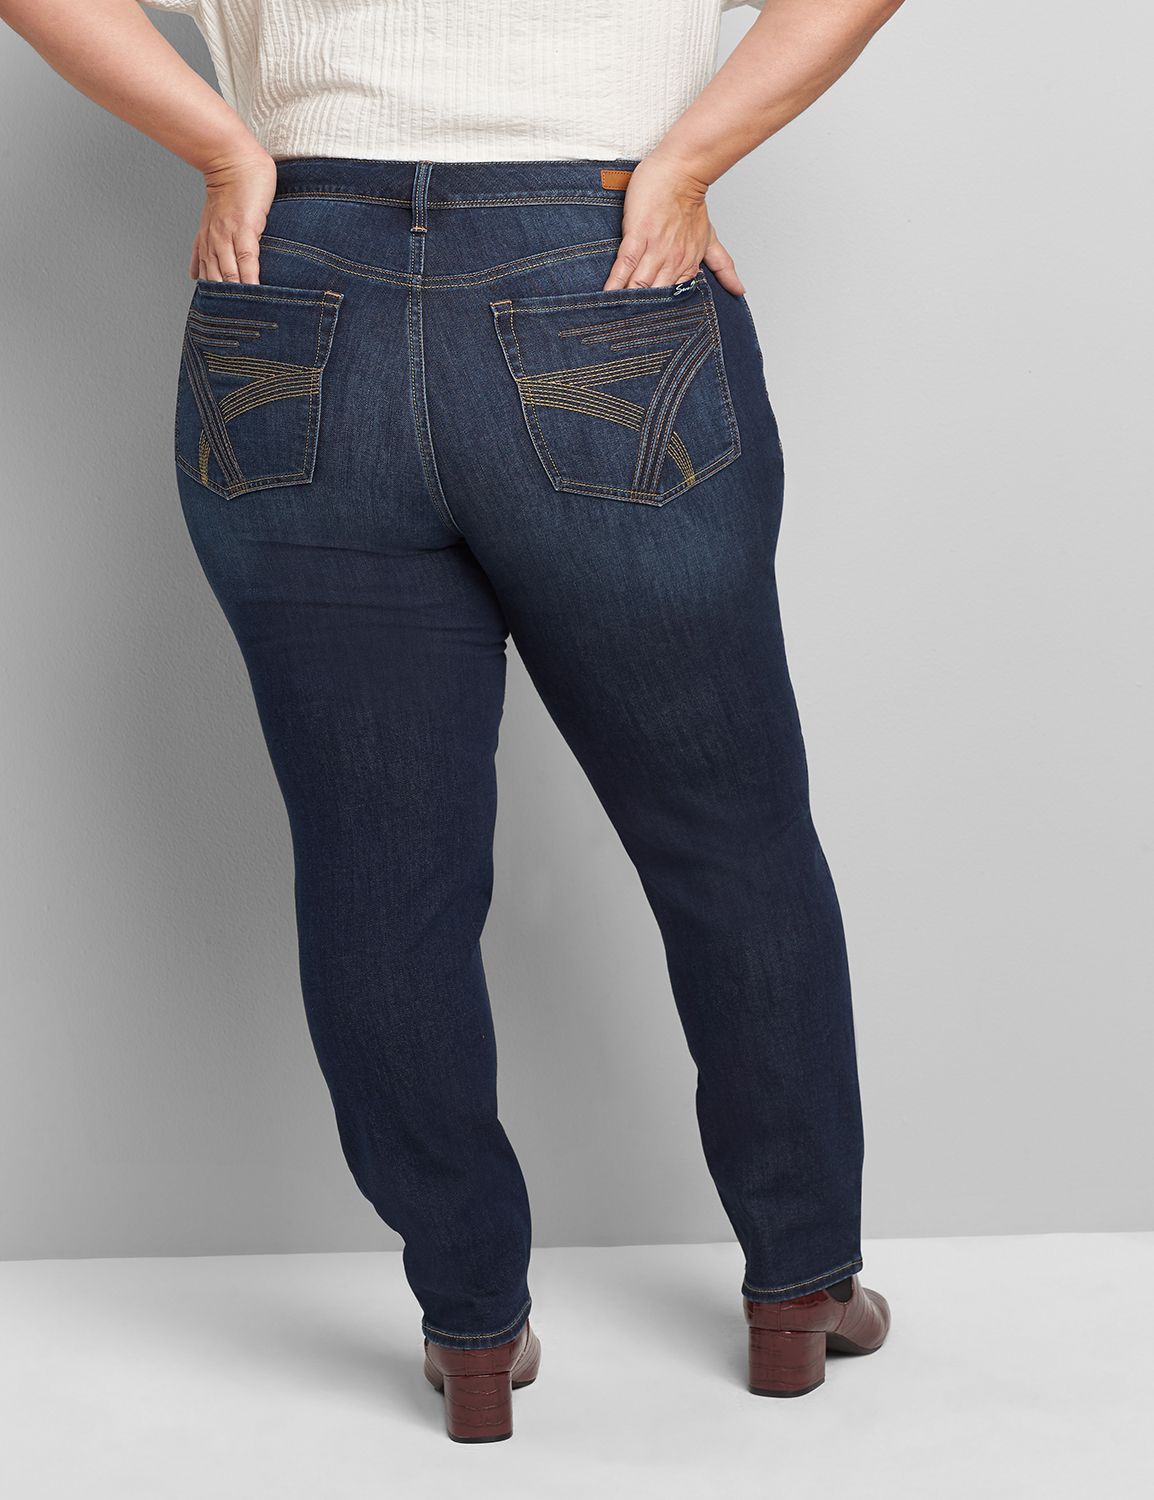 lane bryant jeans